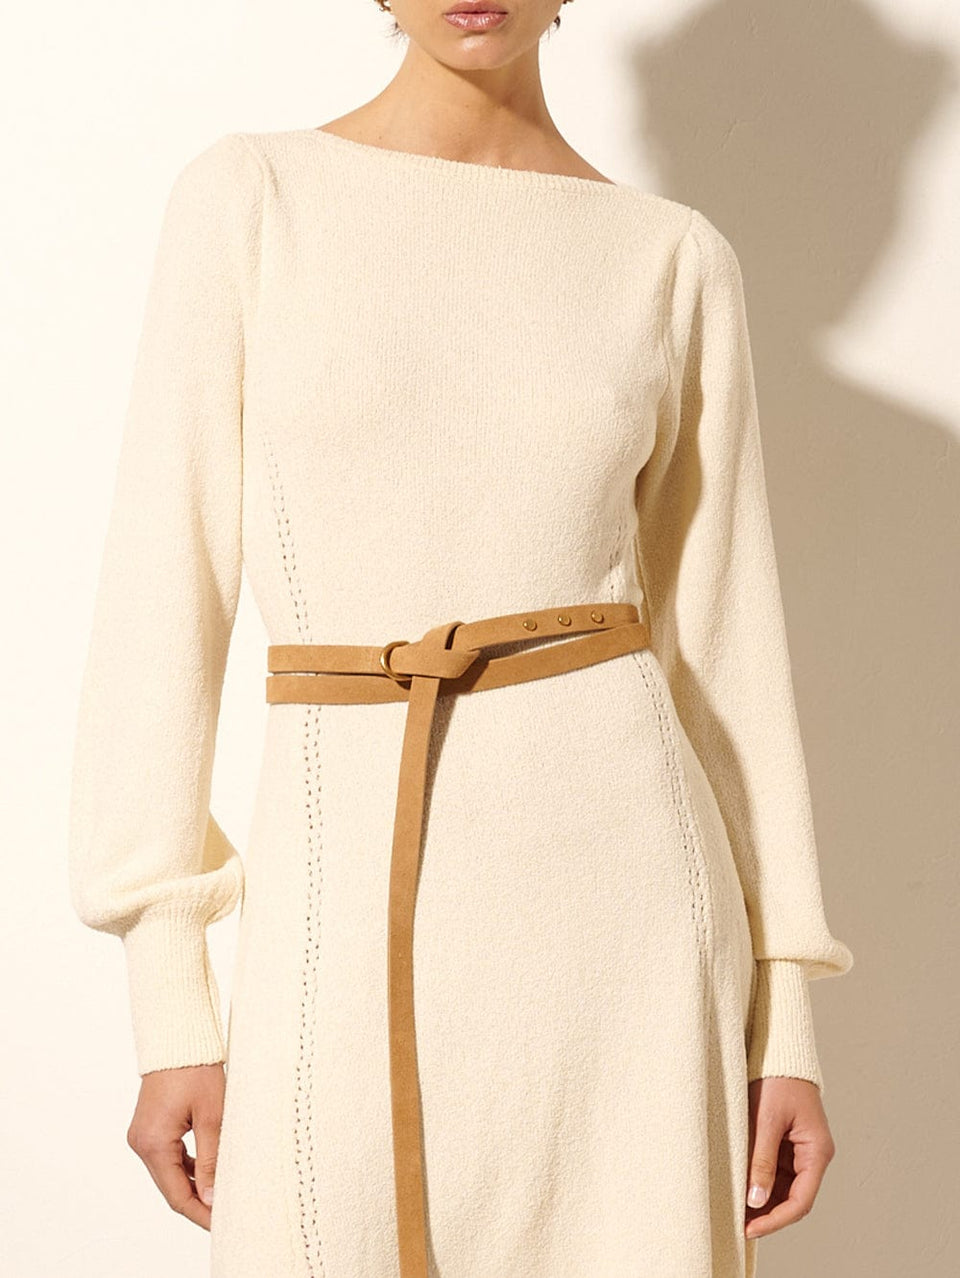 Cali Knit Mini Dress KIVARI | Model wears cream knit mini dress close up